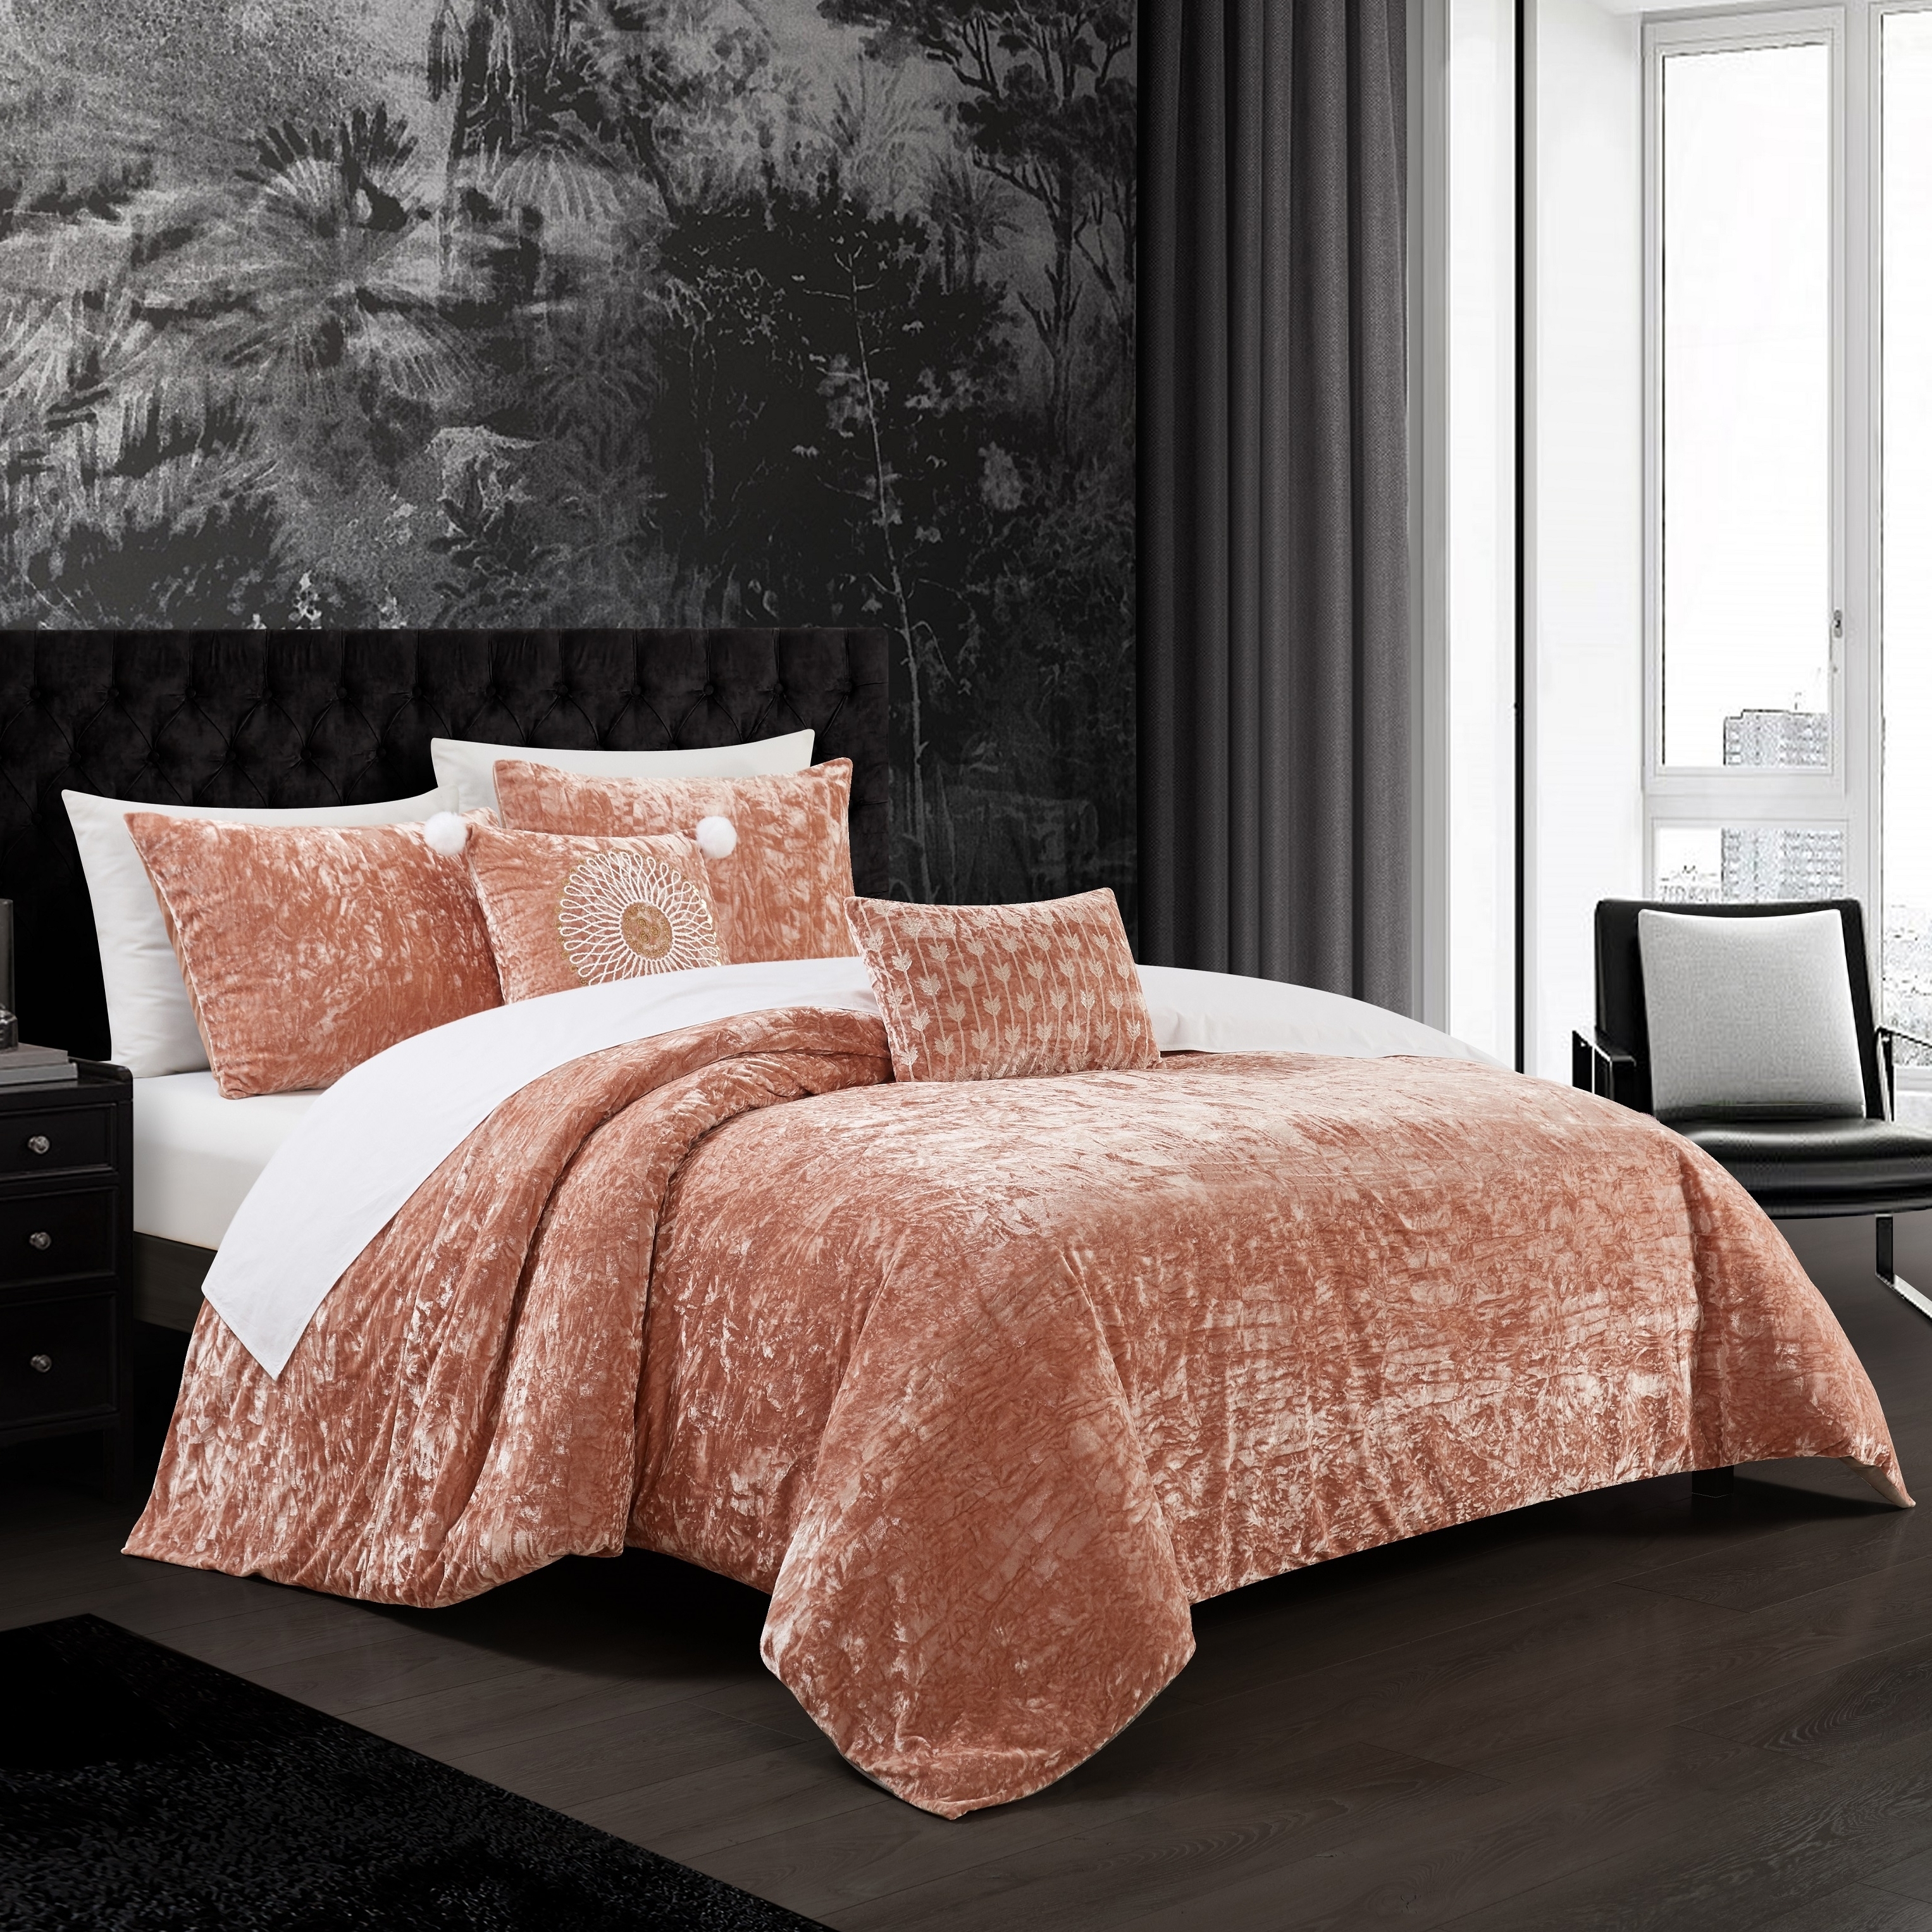 Giuliana 5 Piece Comforter Set Crinkle Crushed Velvet Bedding - Blush, Queen